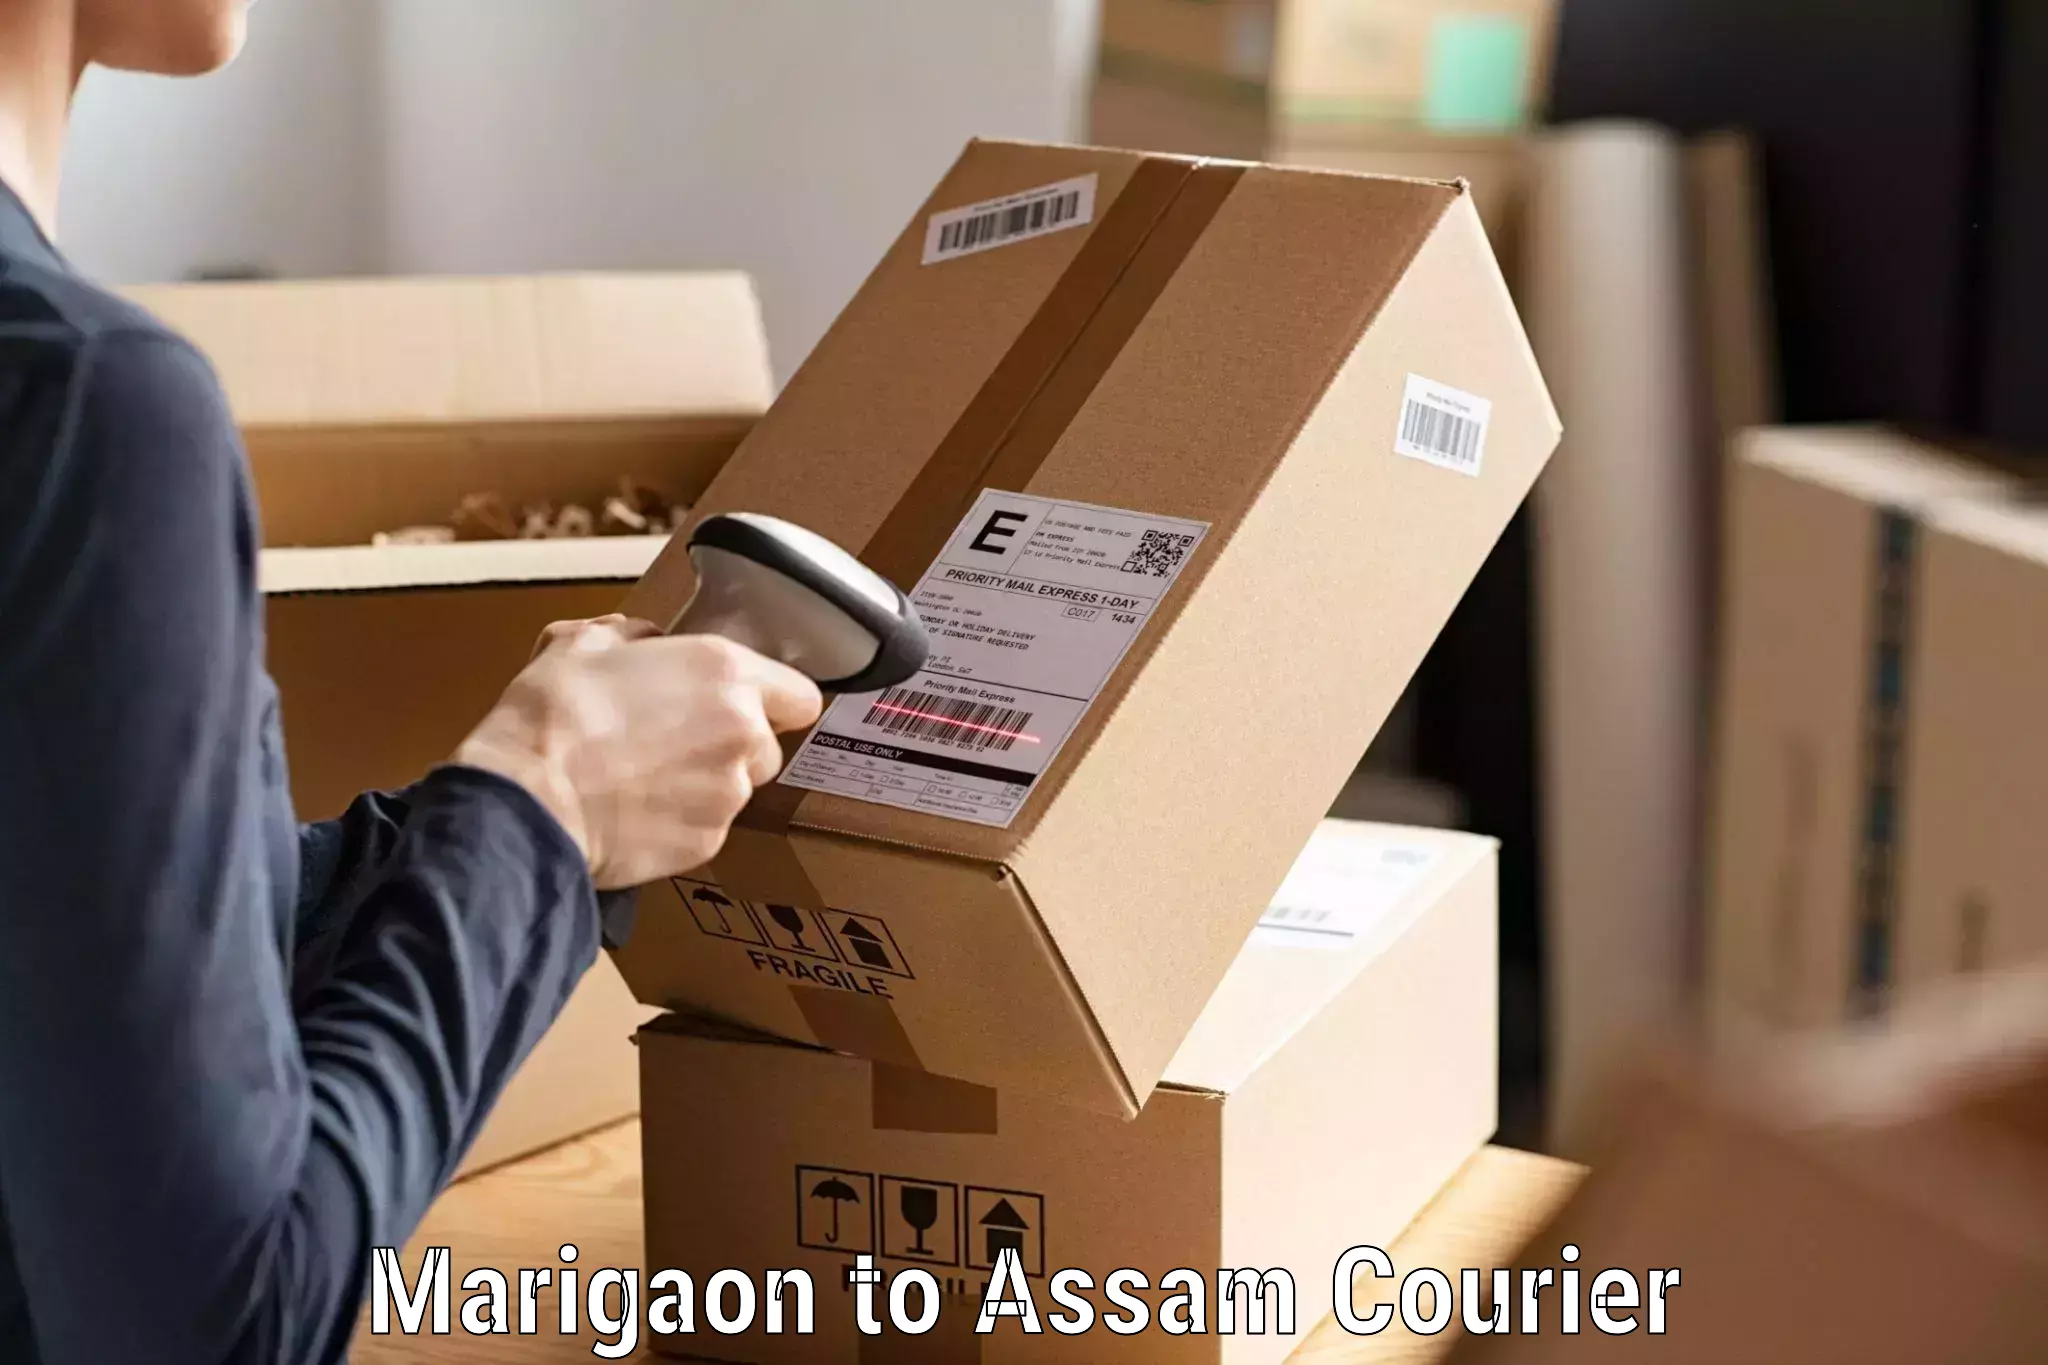 Courier service comparison Marigaon to Mariani